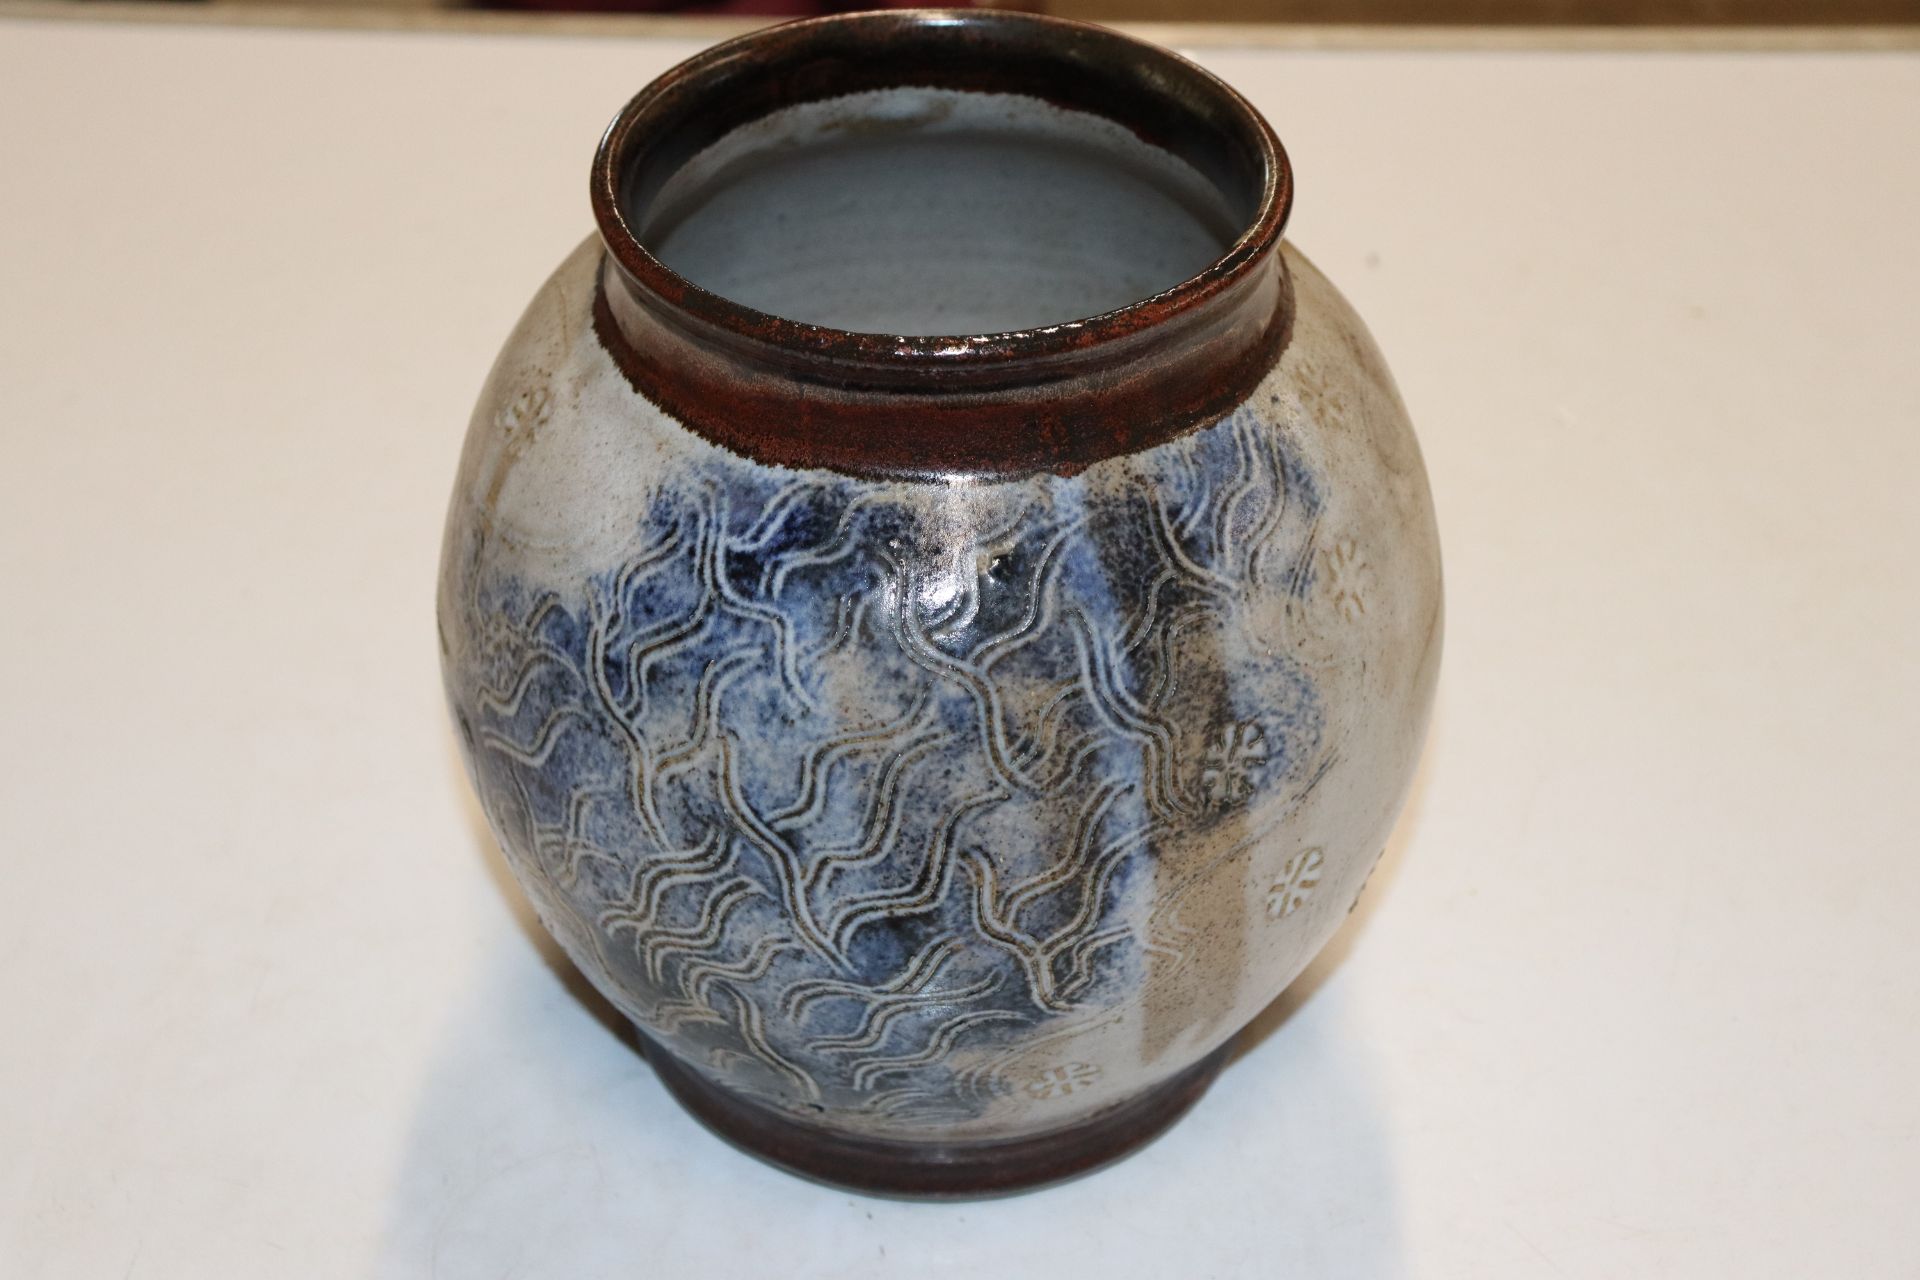 A Studio Pottery baluster vase, having incised flo